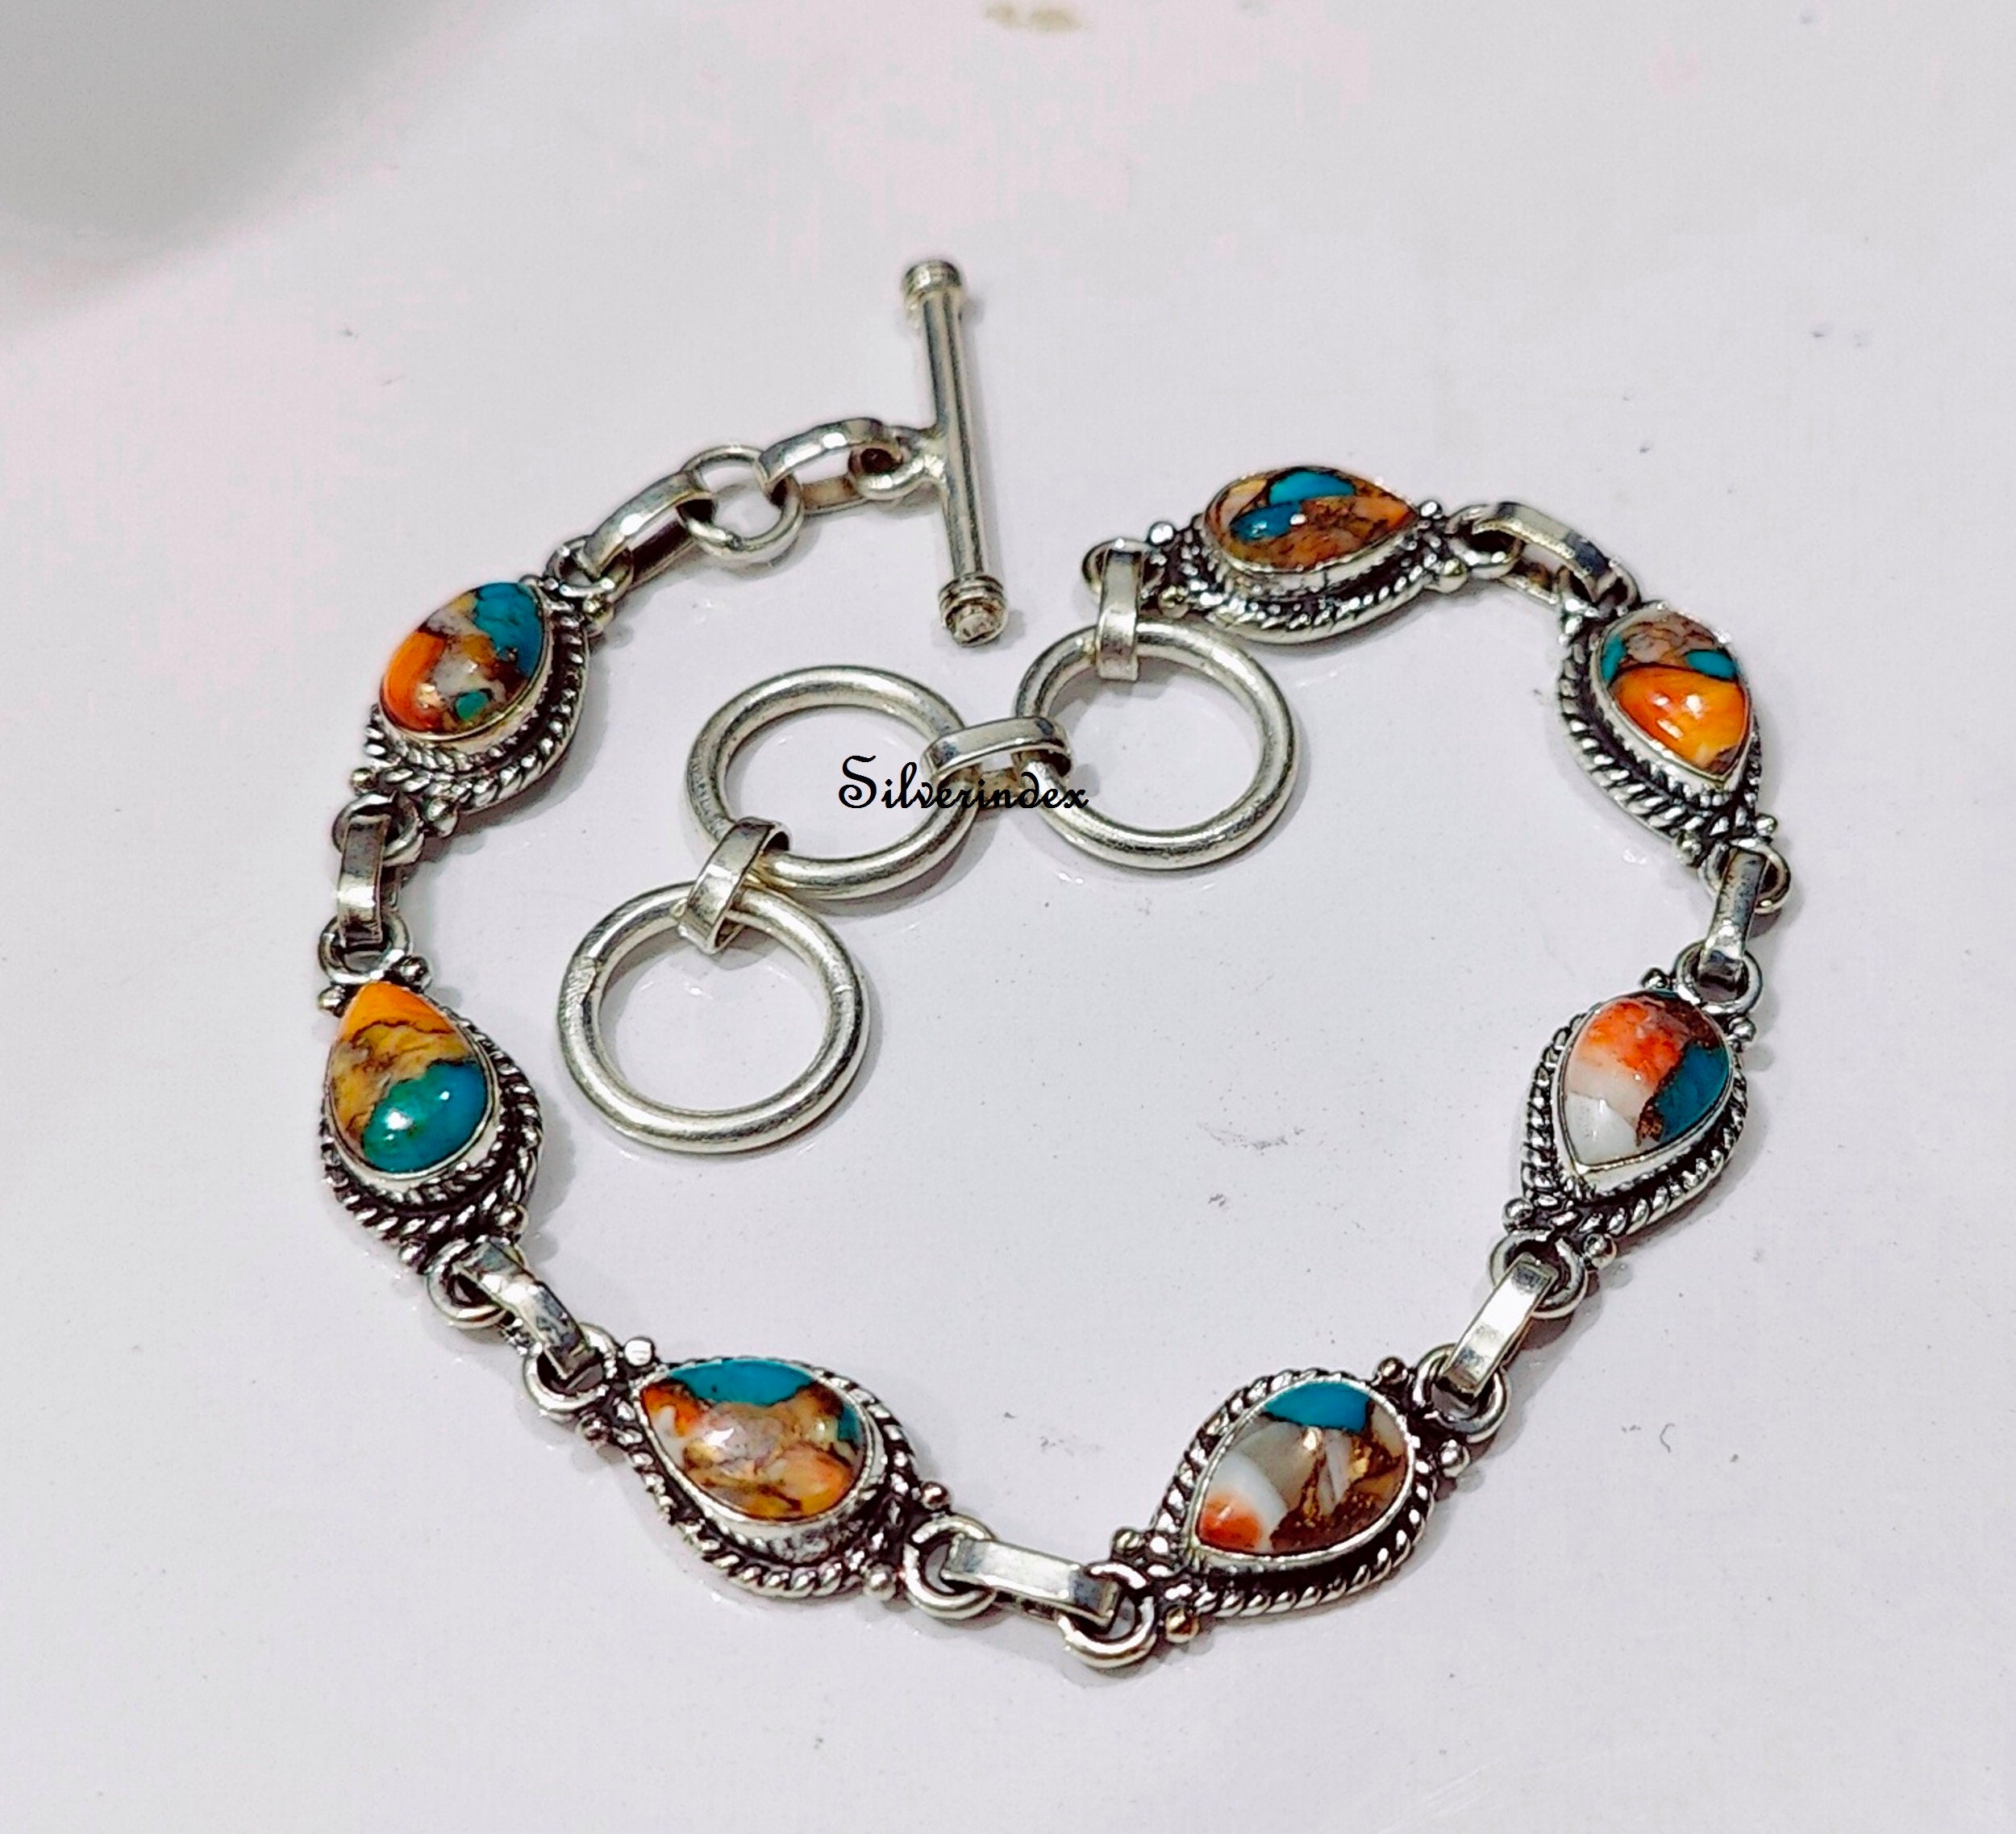 Small Rounded Fine Stone and Sterling Silver Medal Bracelet - Lapis Lazuli  - Beads - Range of customizable bracelets.